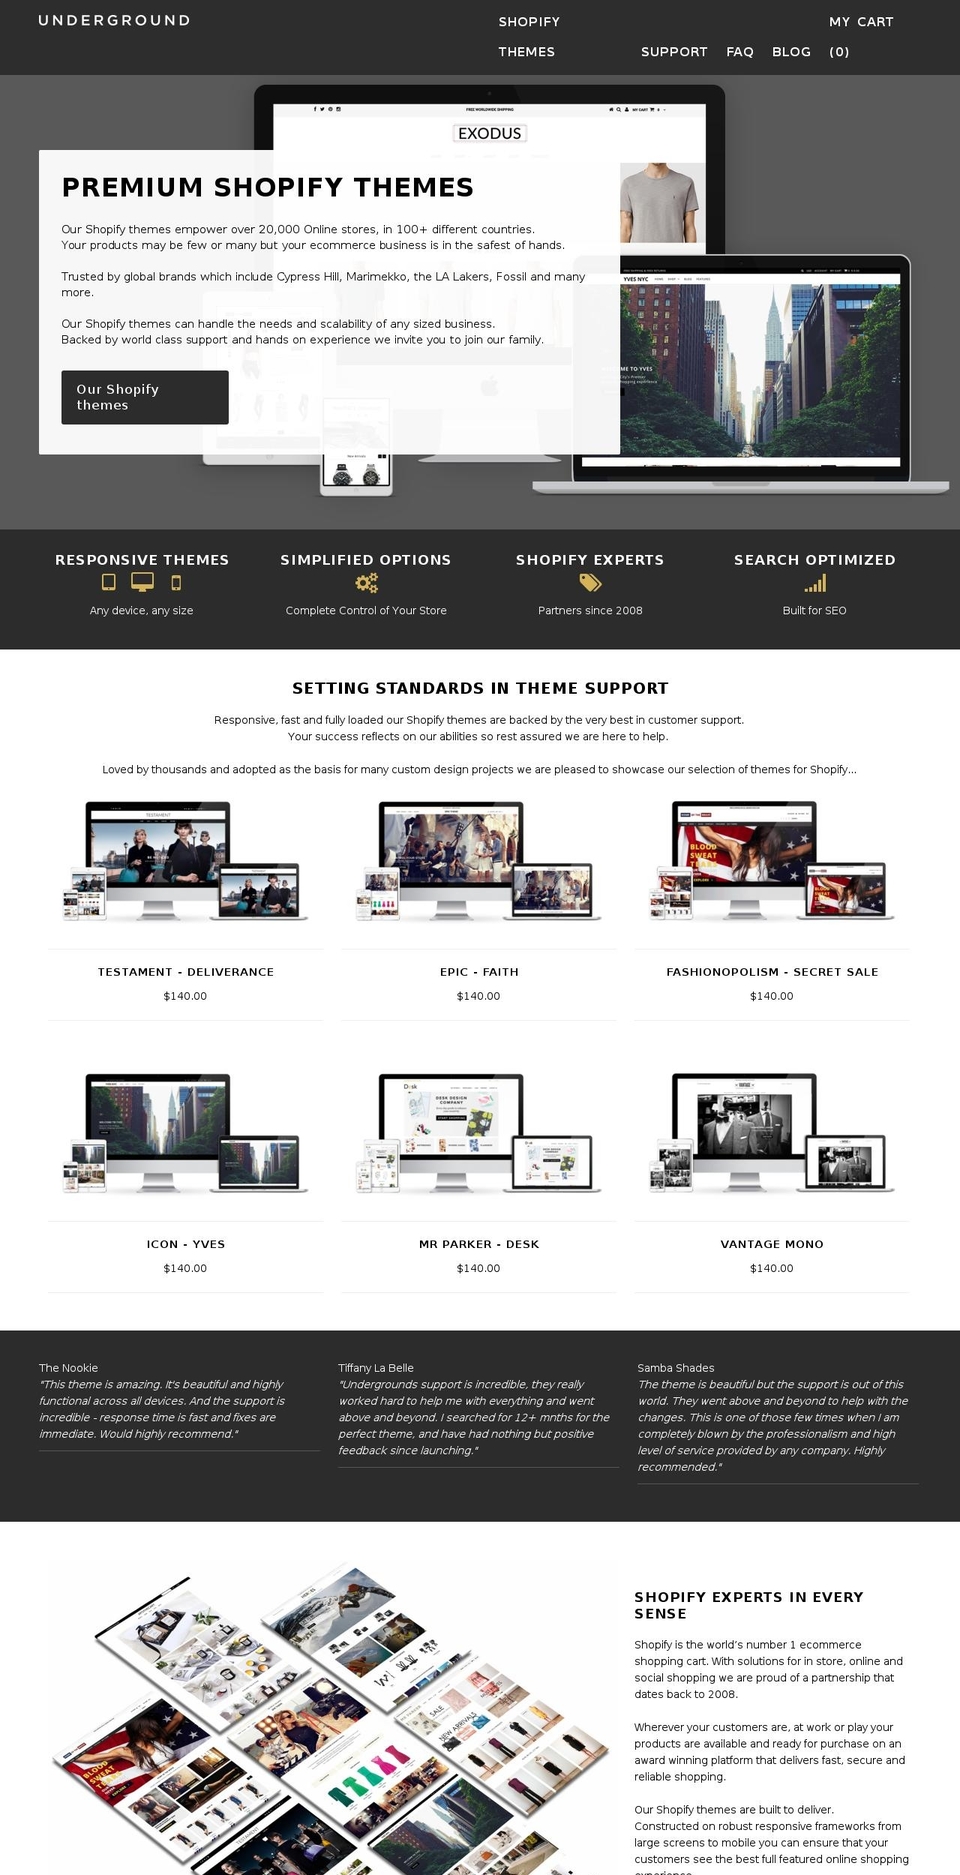 undergroundmedia.co.uk shopify website screenshot